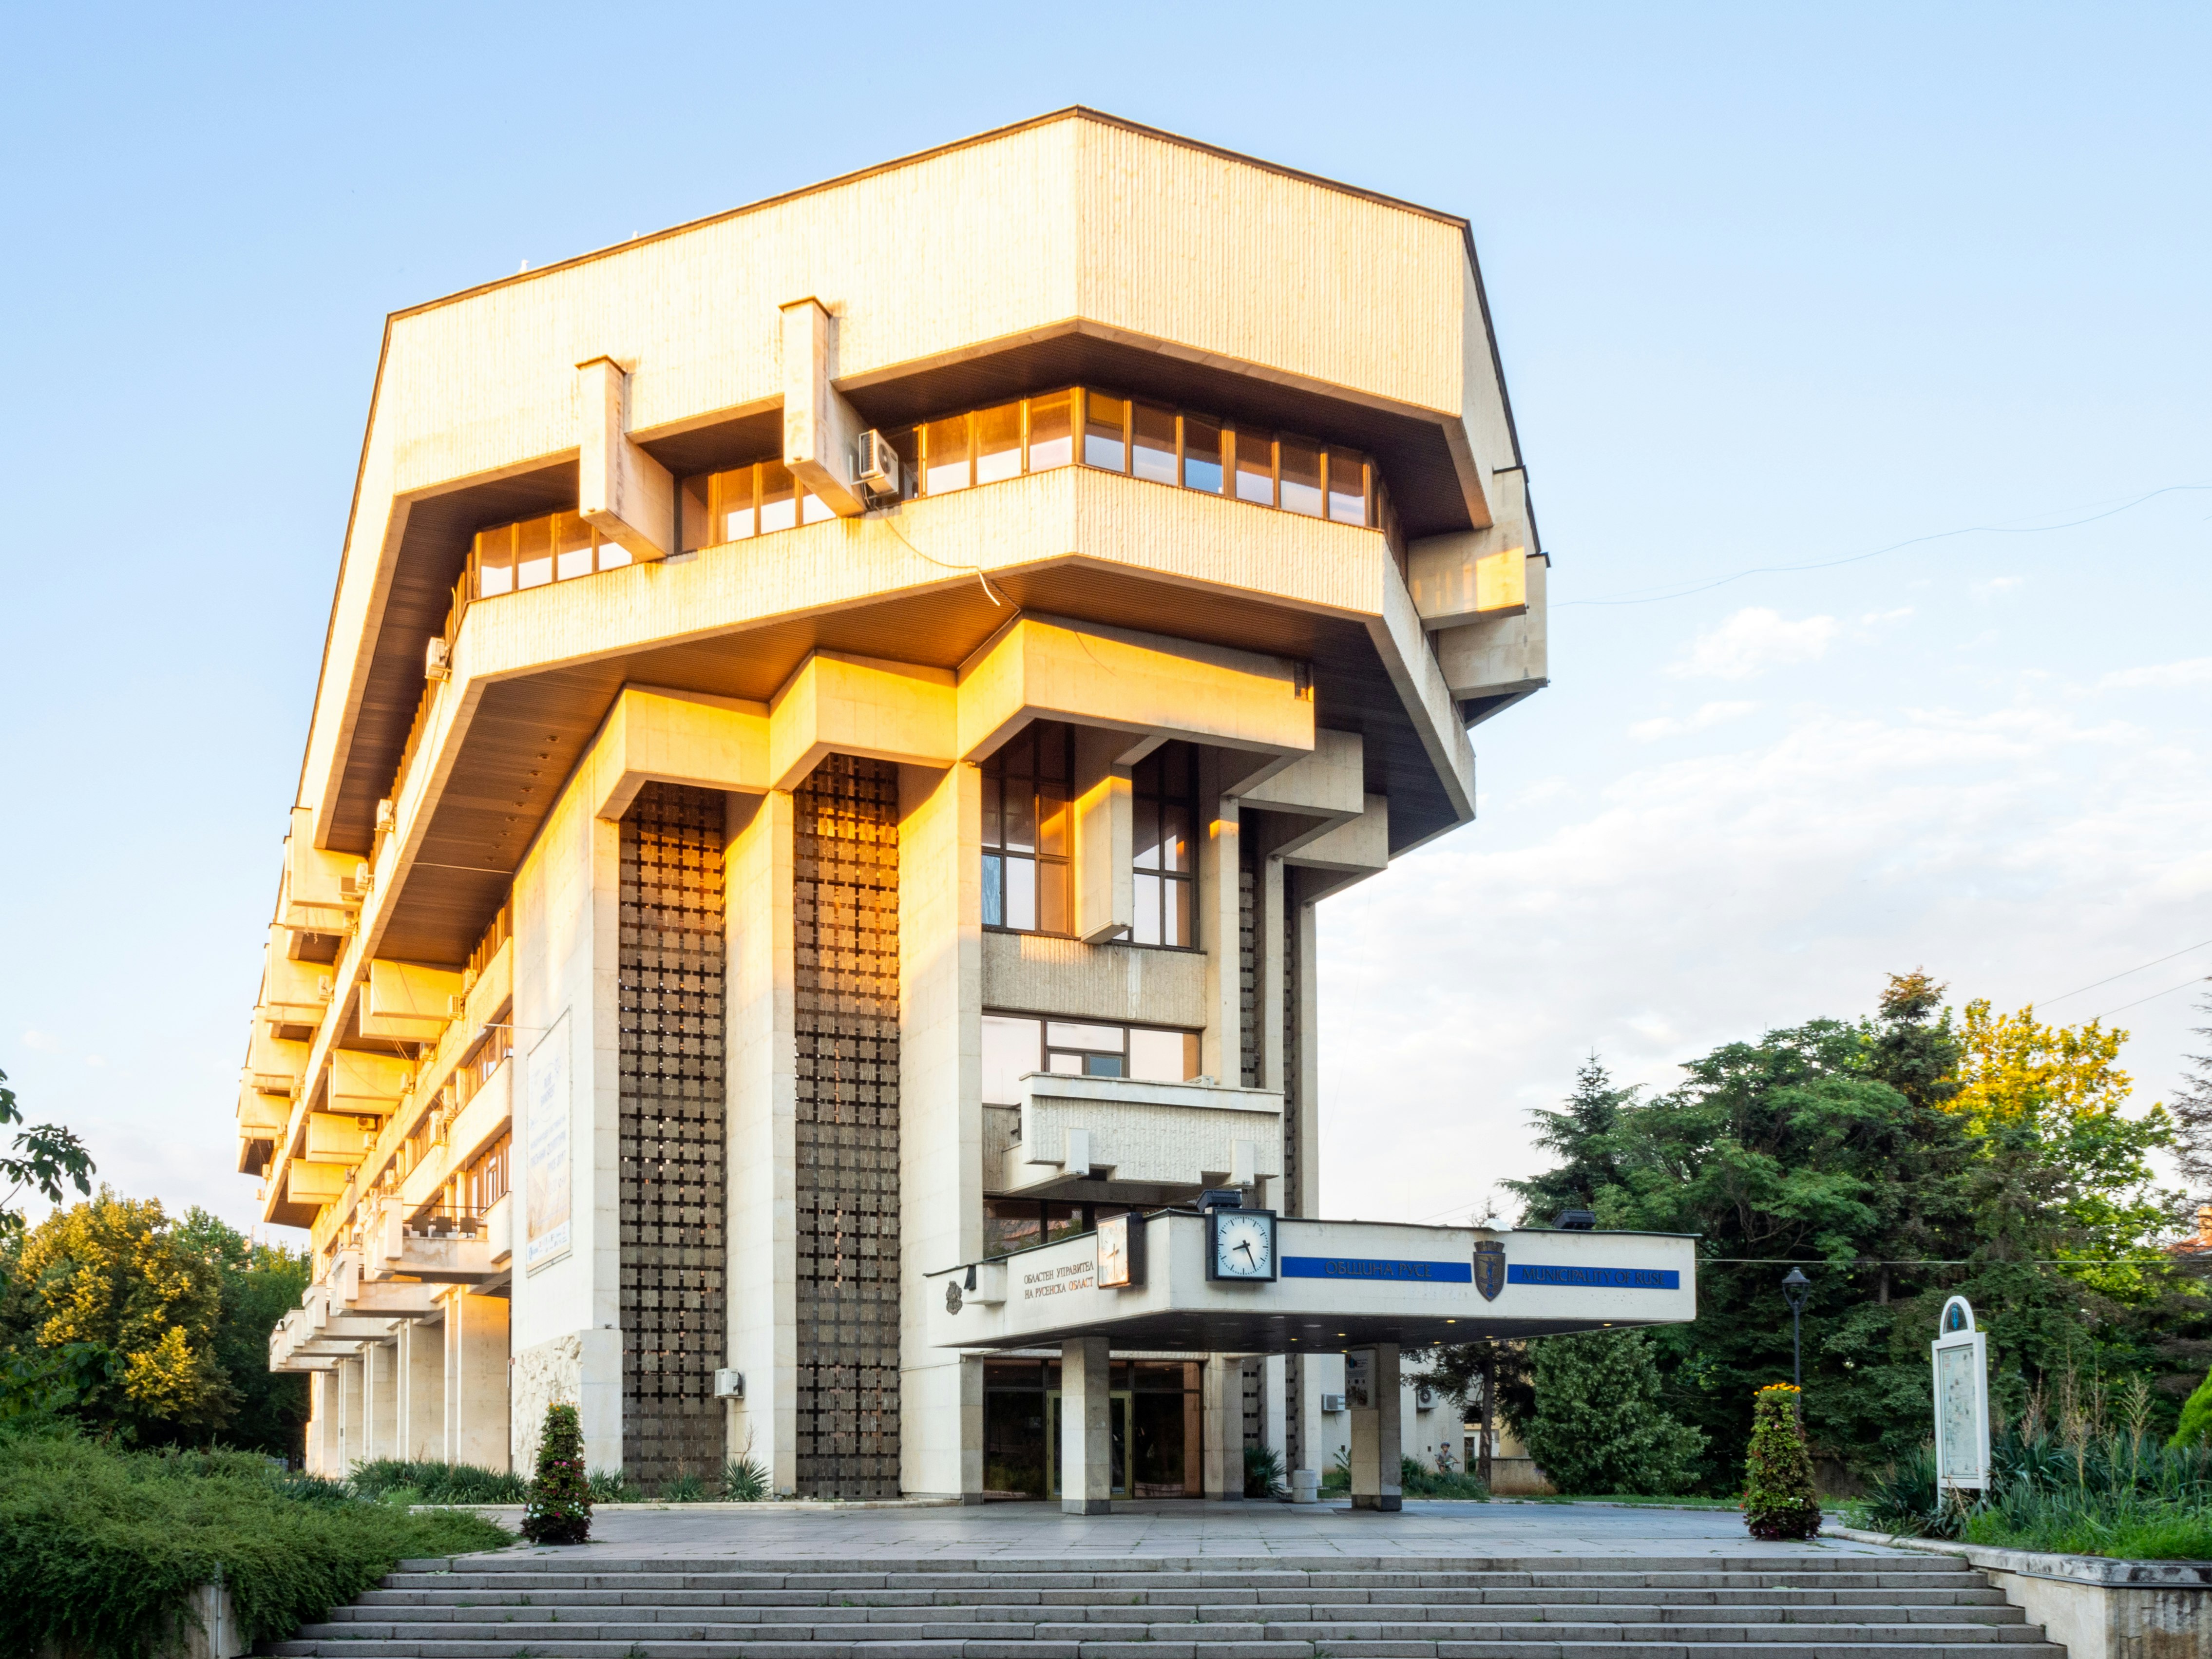 Municipality Hall in Ruse, Bulgaria.